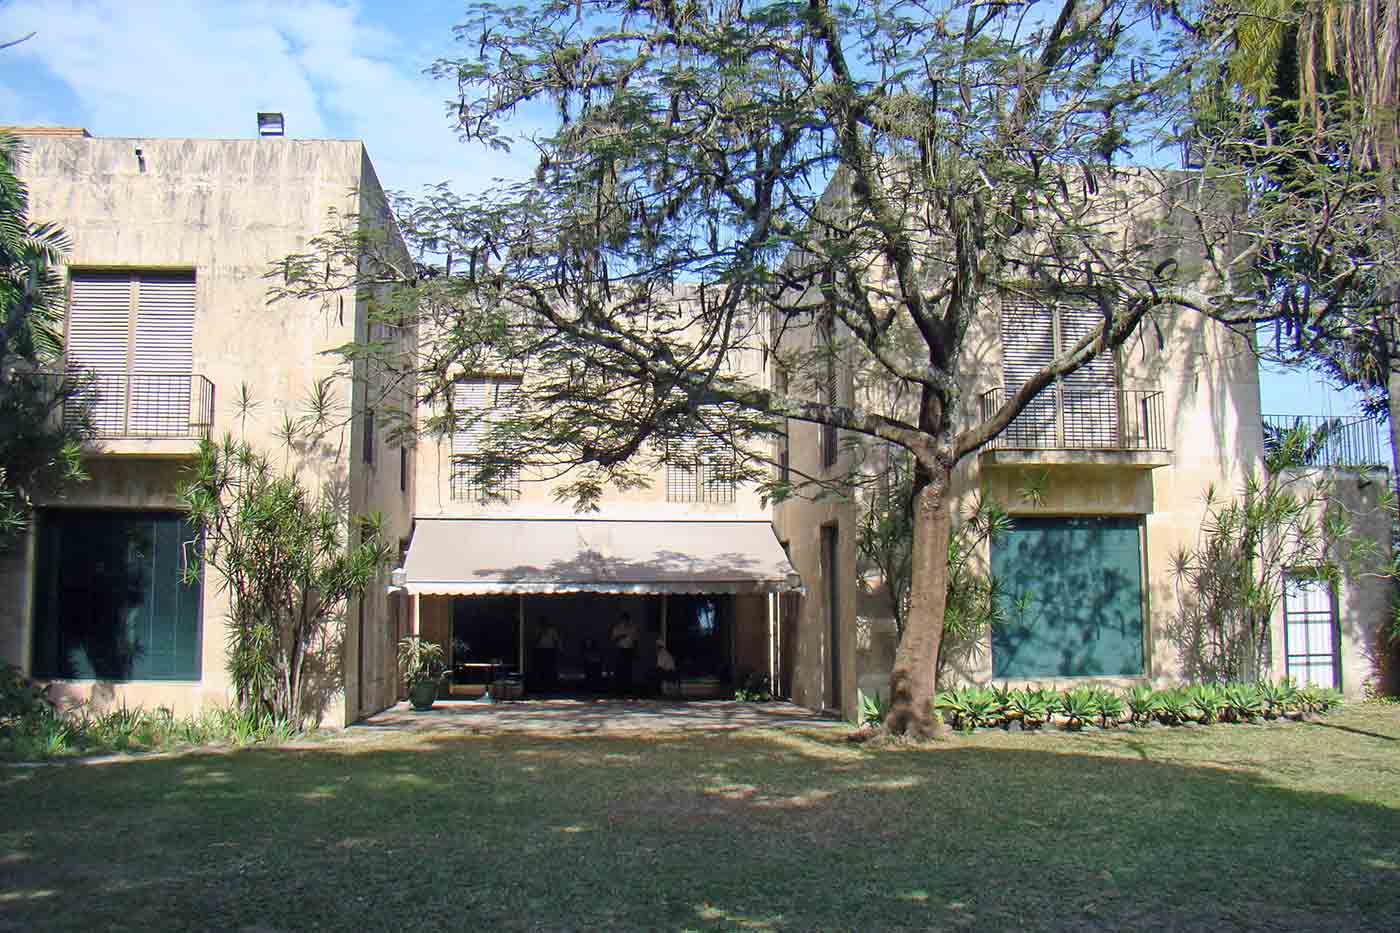 Chacara do Ceu Museum